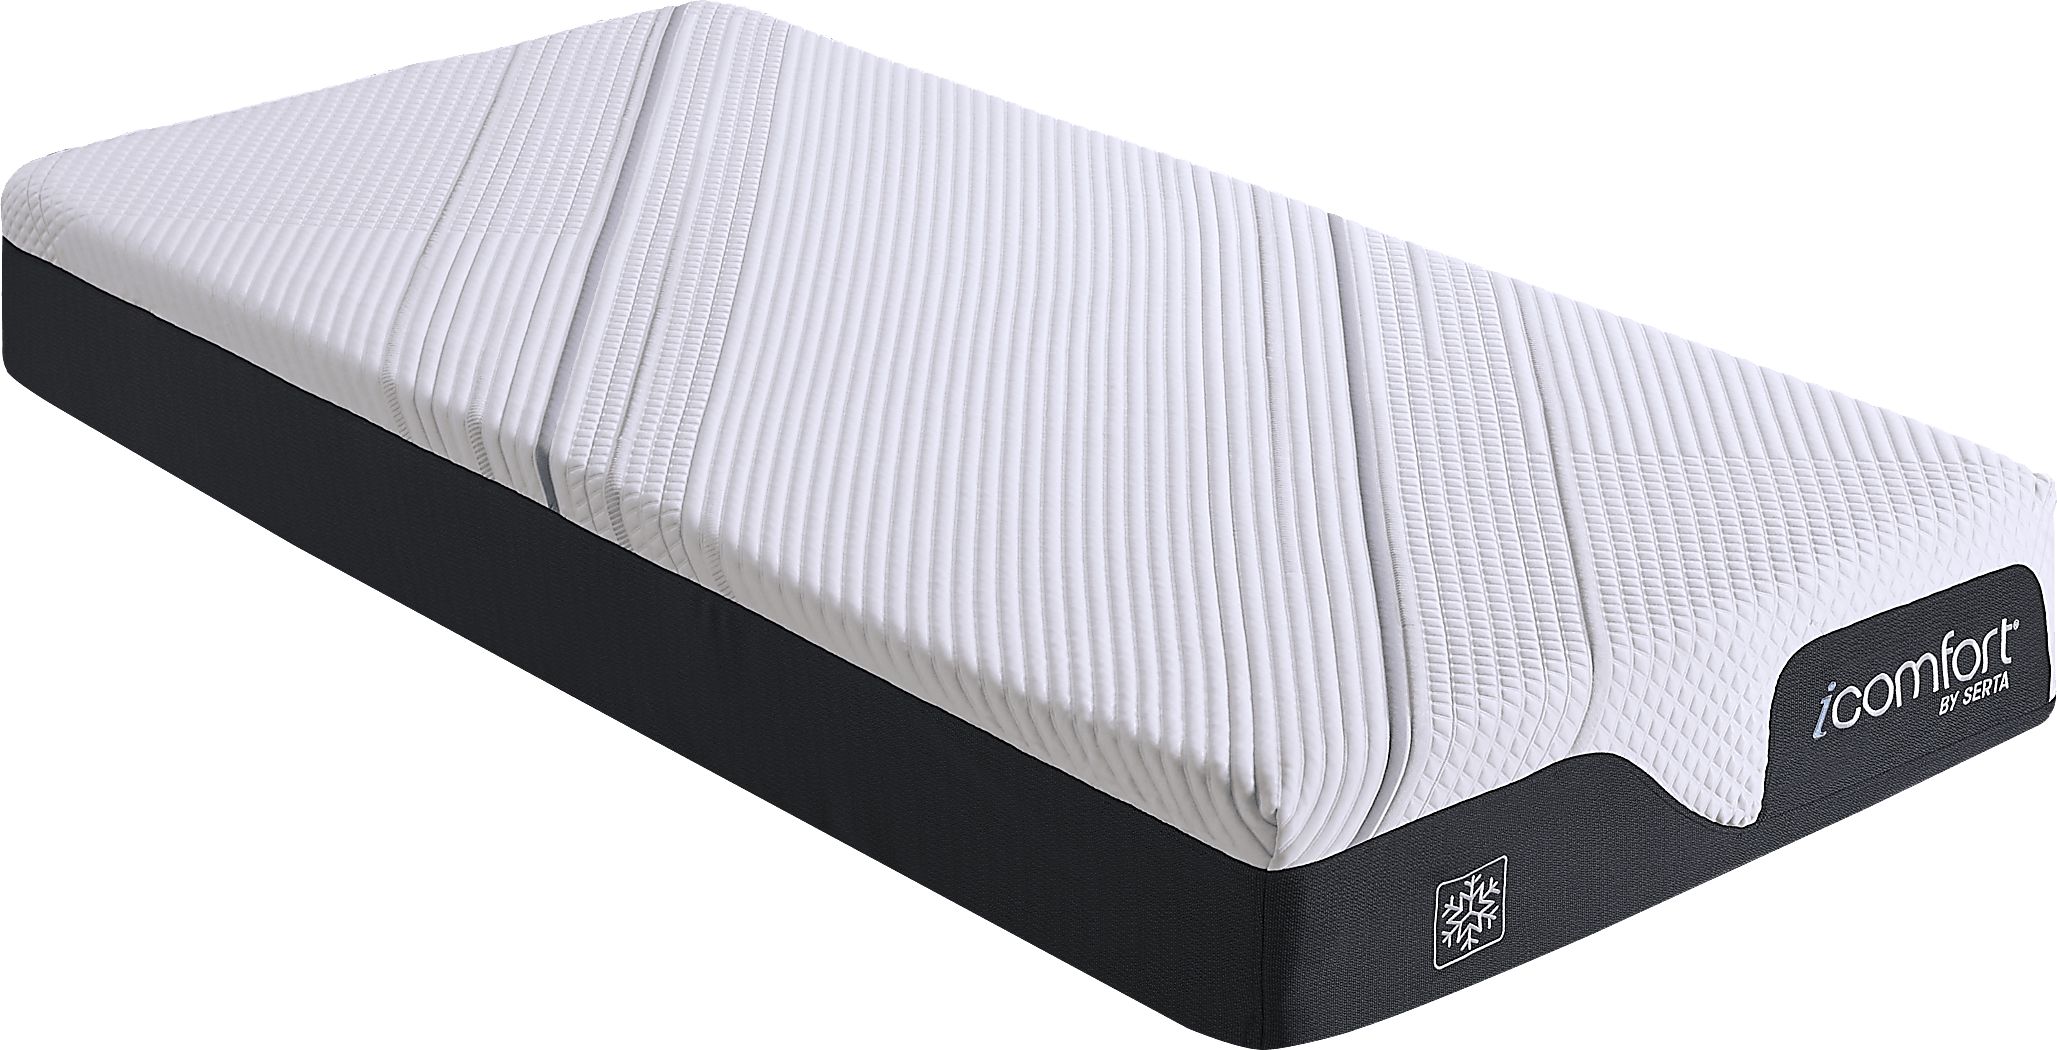 serta icomfort limited edition plush mattress reviews